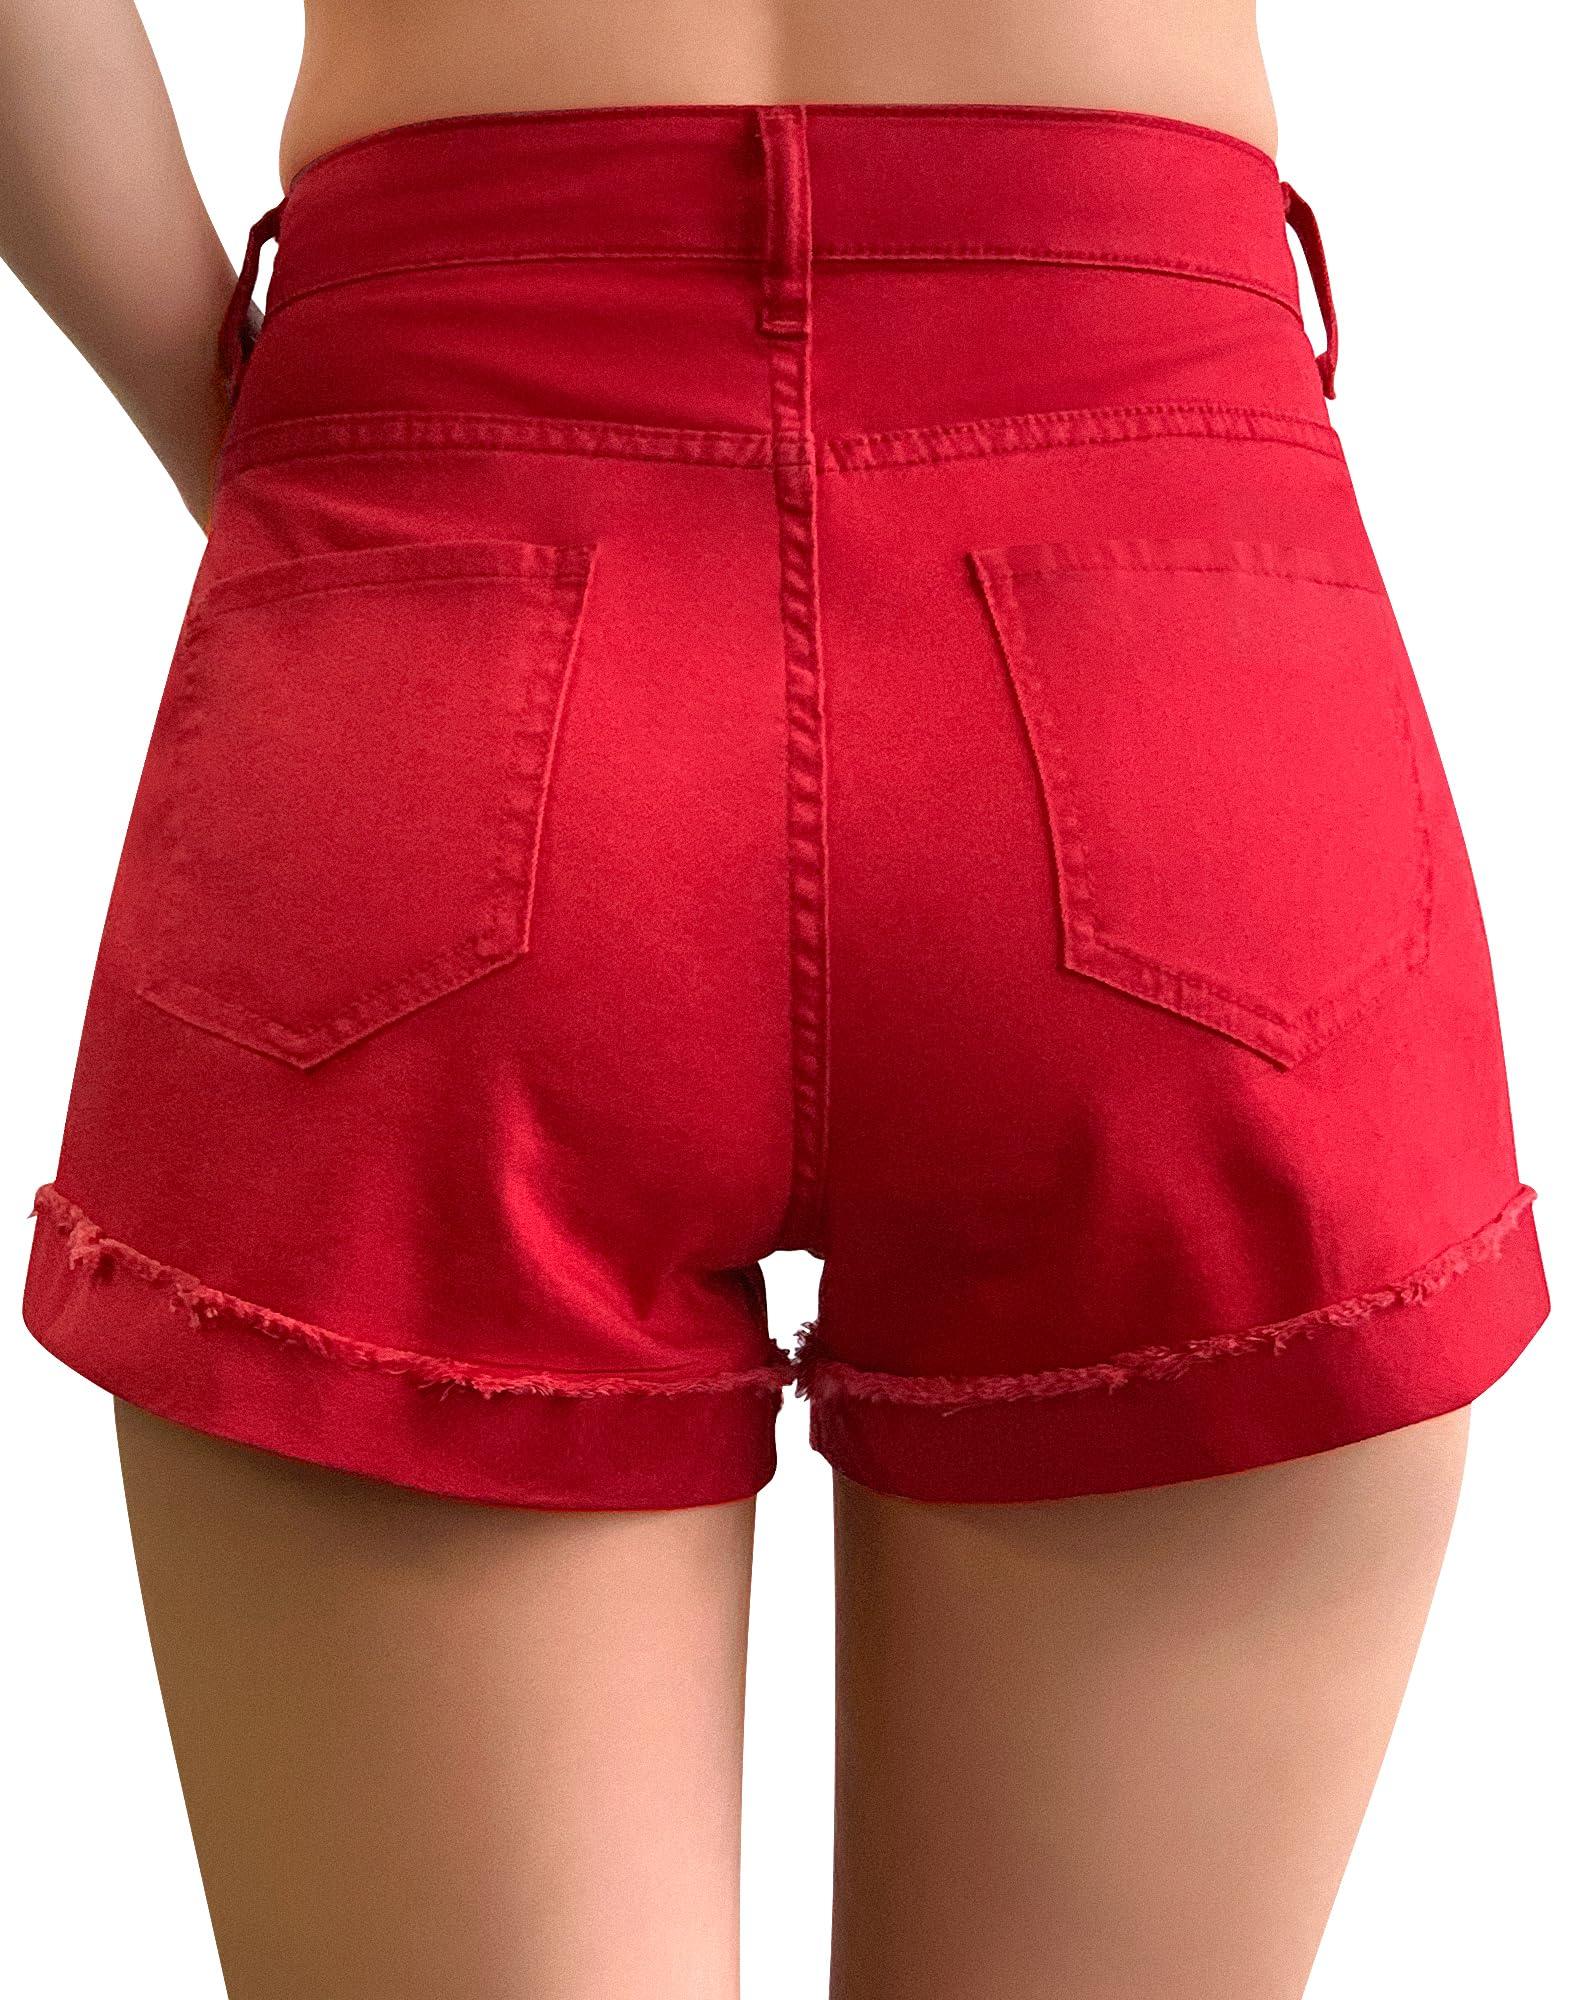 roswear Women's Ripped Mid Rise Colorful Jeans Shorts Stretch Rolled Hem Denim Shorts Red Medium - Bona Fide Fashion